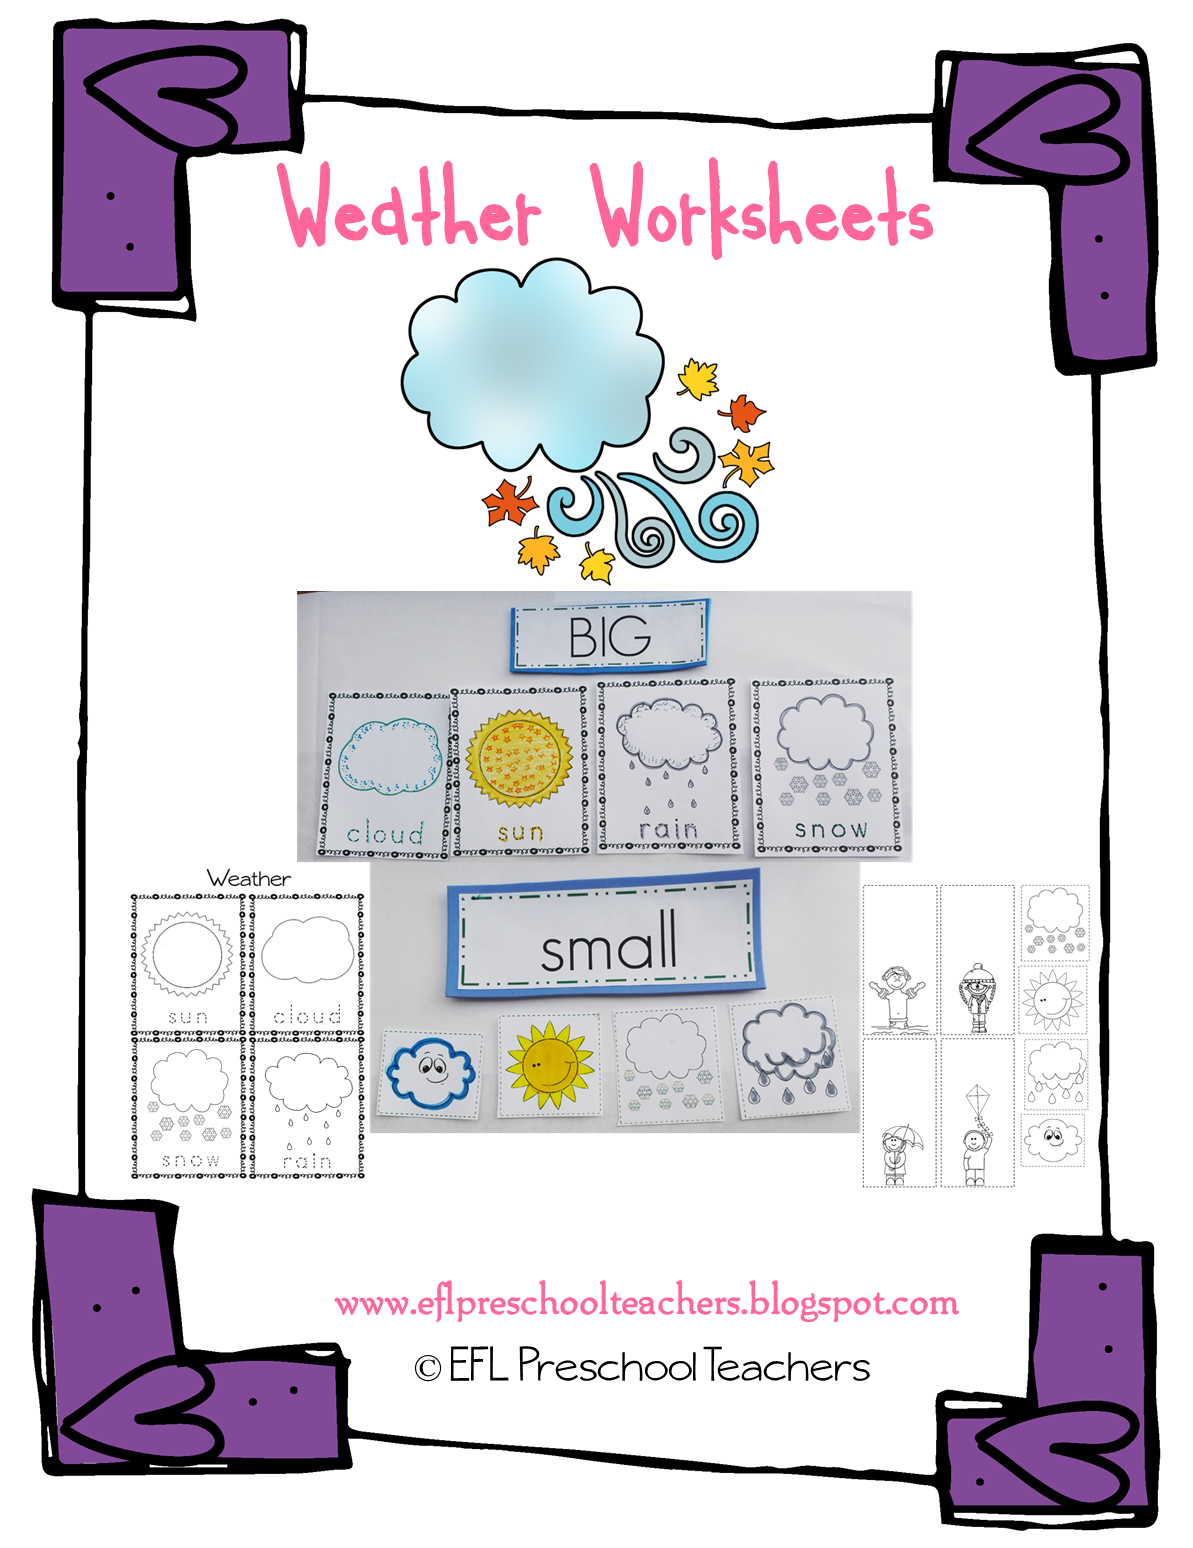 ESL EFL Preschool Teachers Weather Theme Resources For The ELL